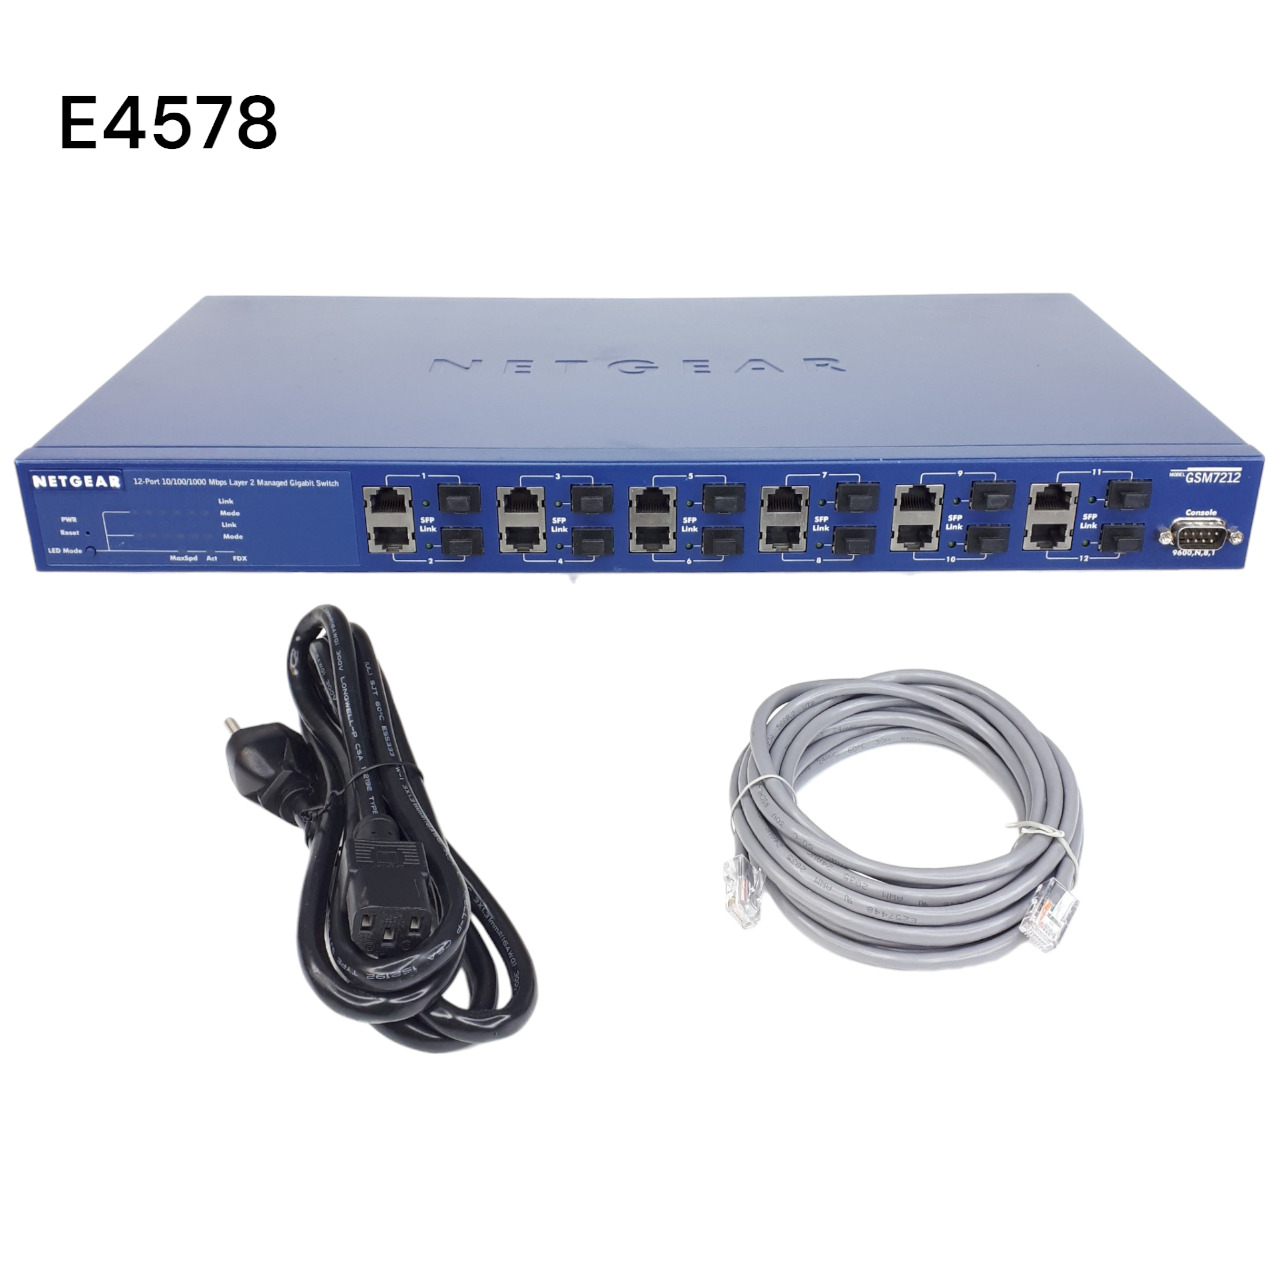 NetGear GSM7212 Prosafe 12 Port Giga Ethernet L2 Managed Switch W/Cable E4578